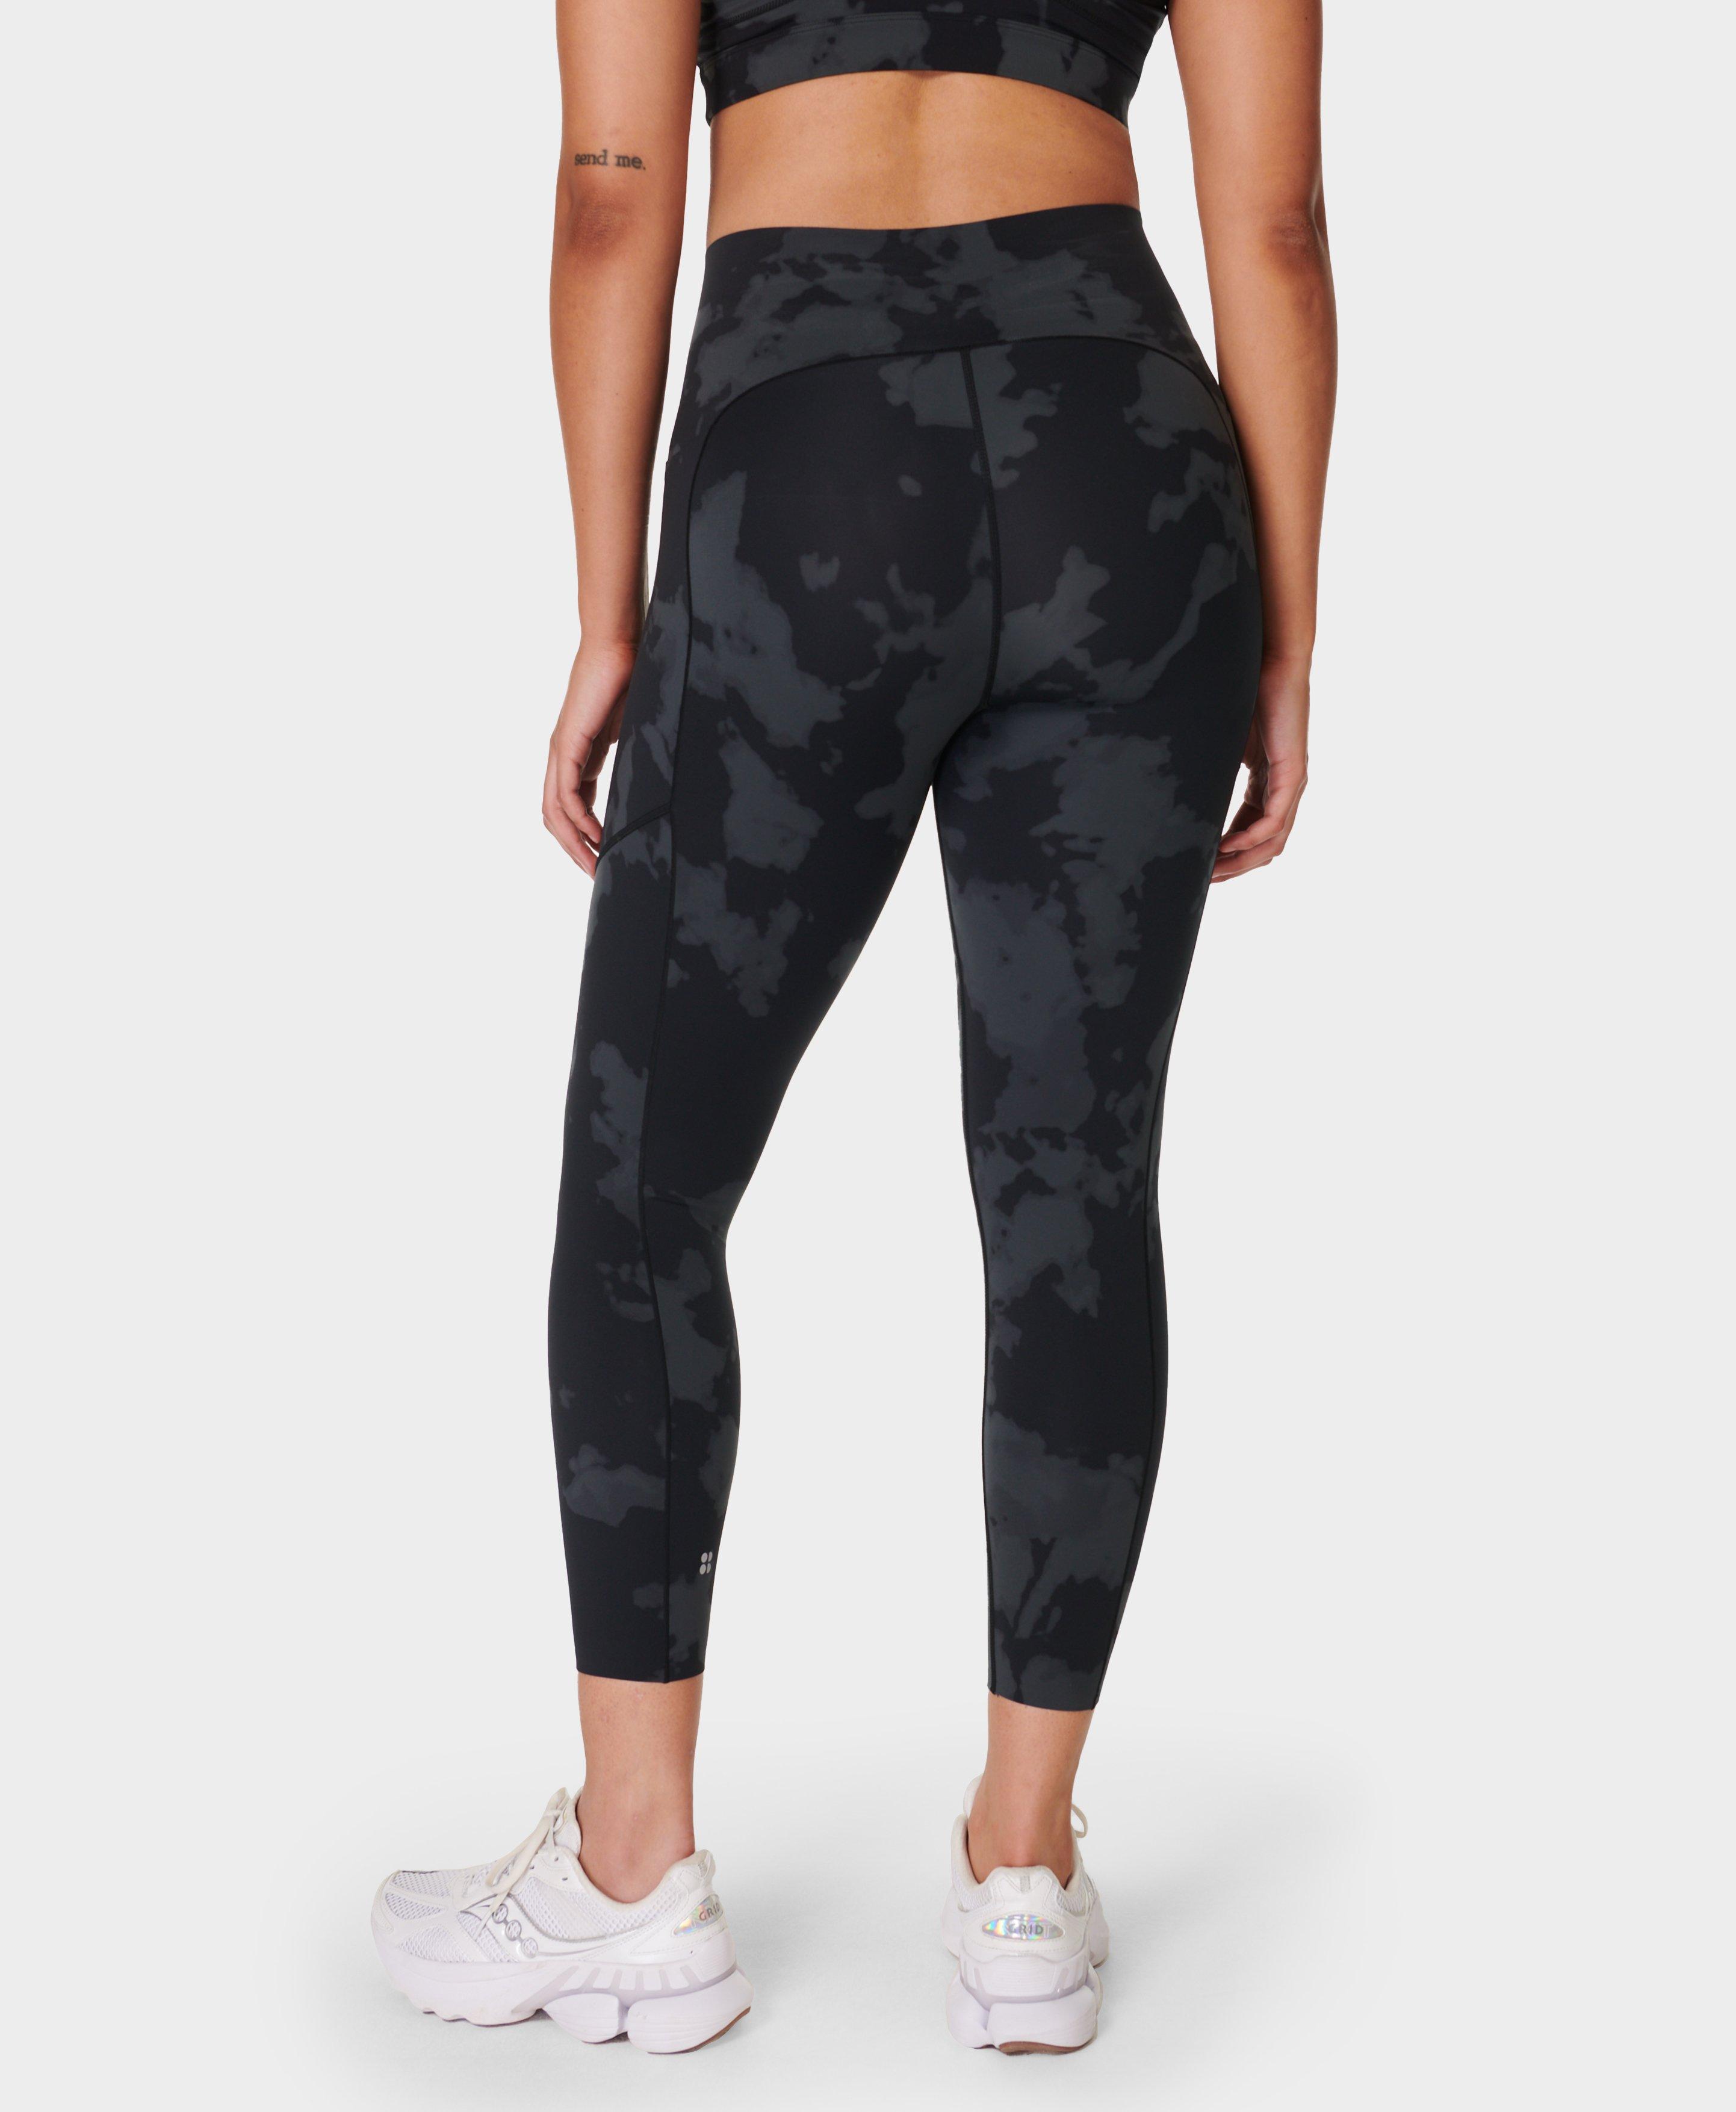 Calia Leggings Black White Print Stay Powerful Side Pocket Workout Womens  Medium